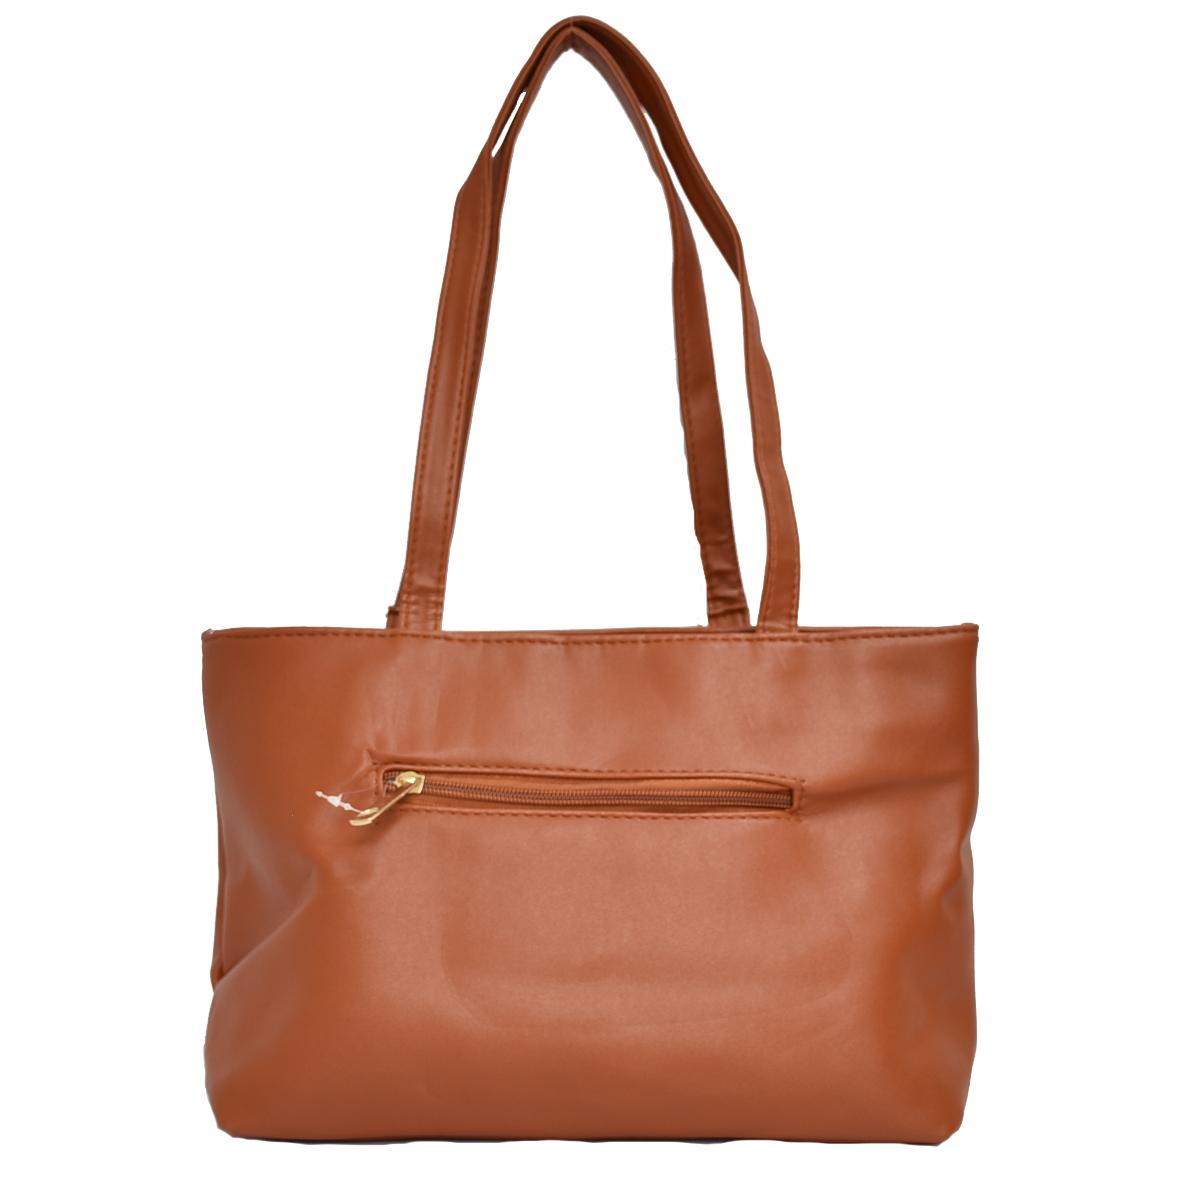 Crisan Bags - Shannon - Handbag-Crisan bags